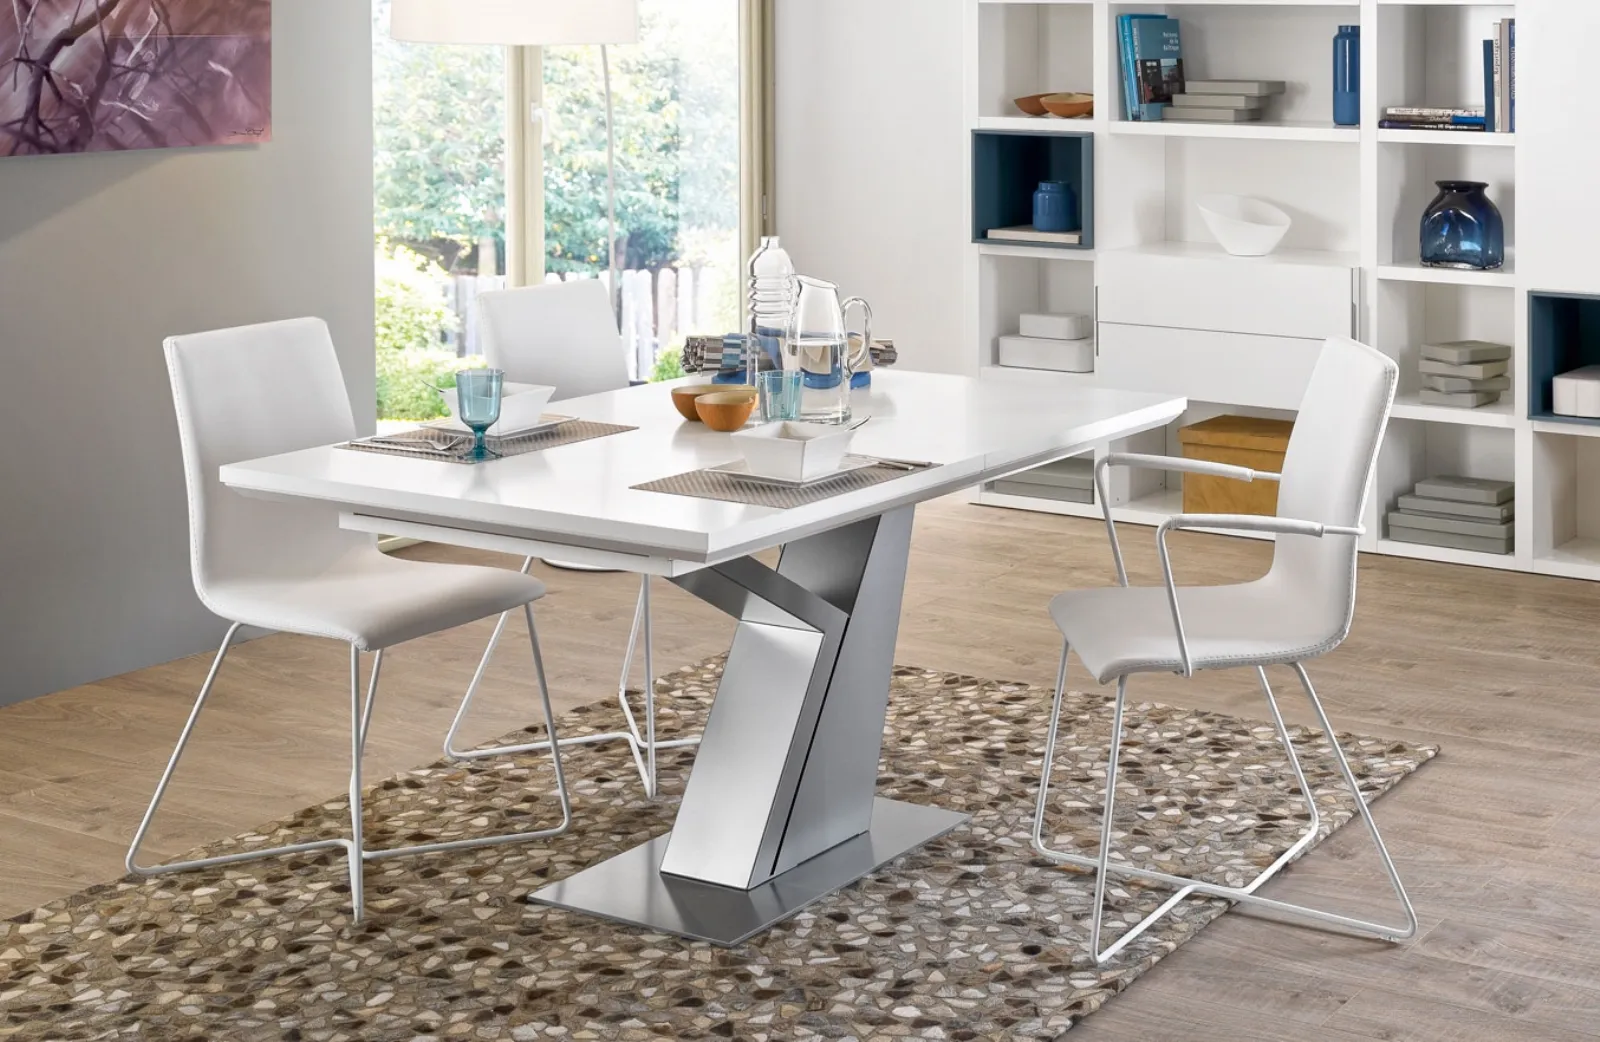 Кухонные столы керамические. Кухонный стол Mertuno 110. Обеденный стол Cobe made by Cosmo ID: 212207. Современный кухонный стол. Необычные кухонные столы.